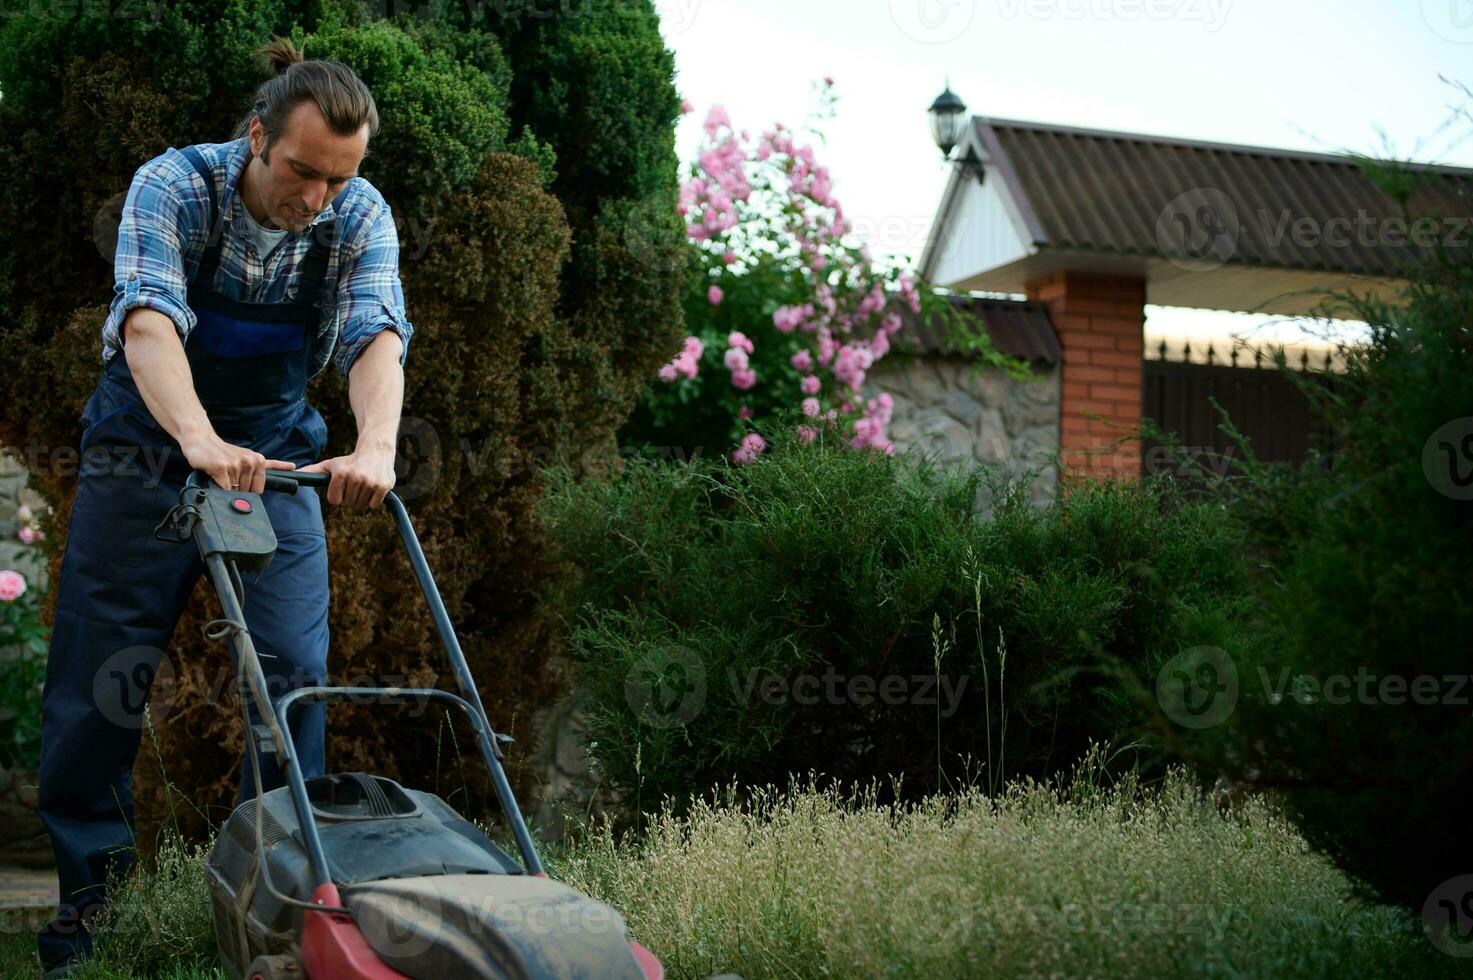 Hispanic gardener in checkered blue shirt and work gardening uniform, mows lawn using electric lawn mower in backyard photo